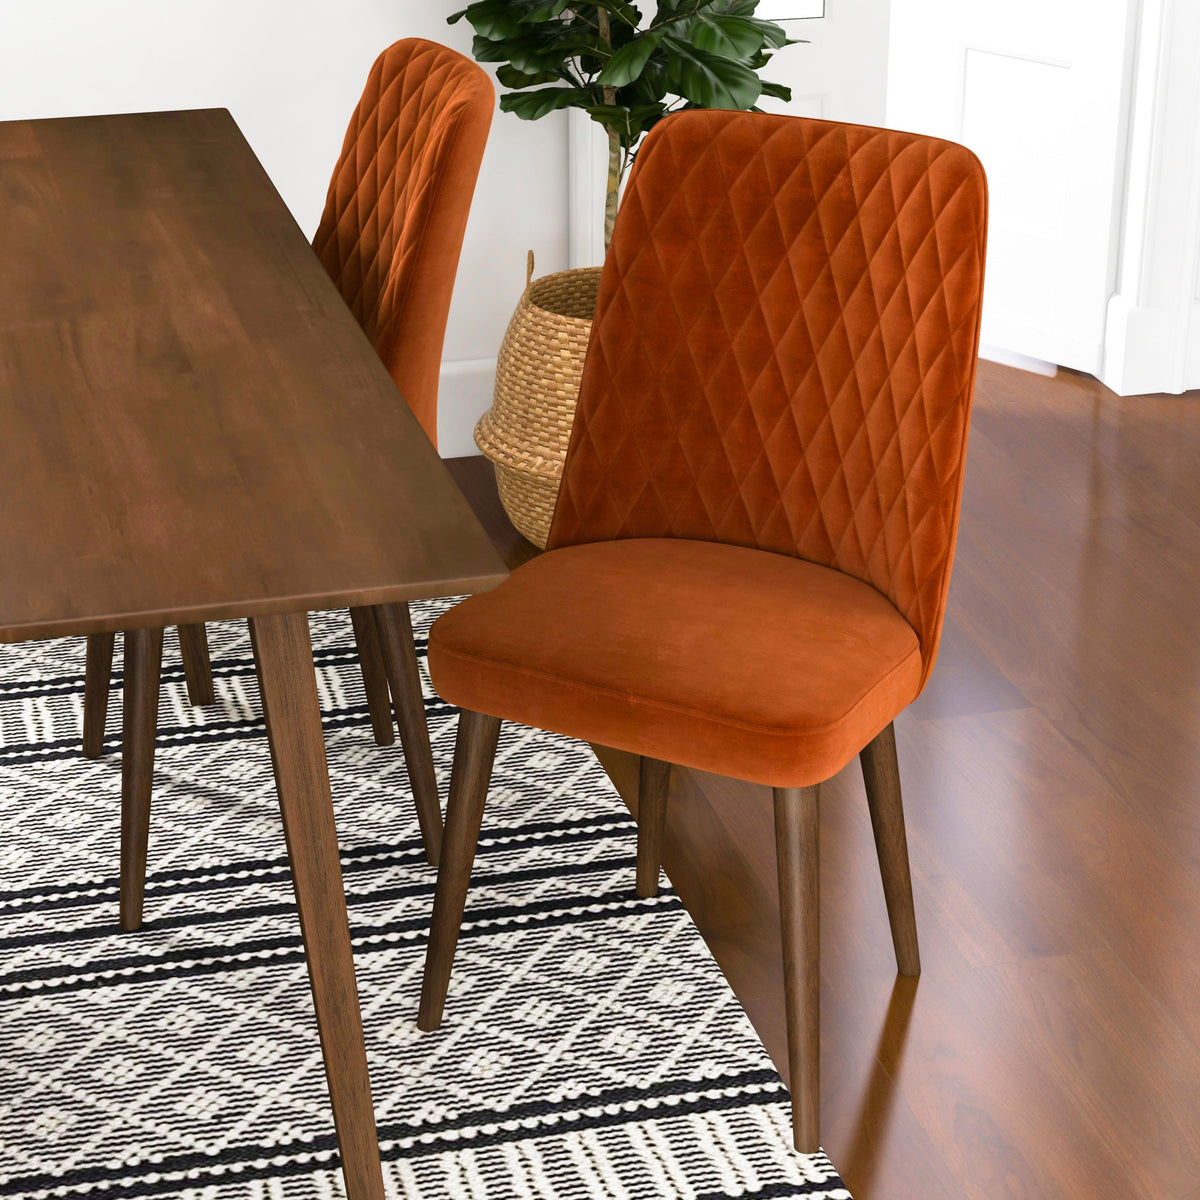 Adira Large Walnut Dining Set - 4 Evette Burnt Orange Chairs | MidinMod | TX | Best Furniture stores in Houston